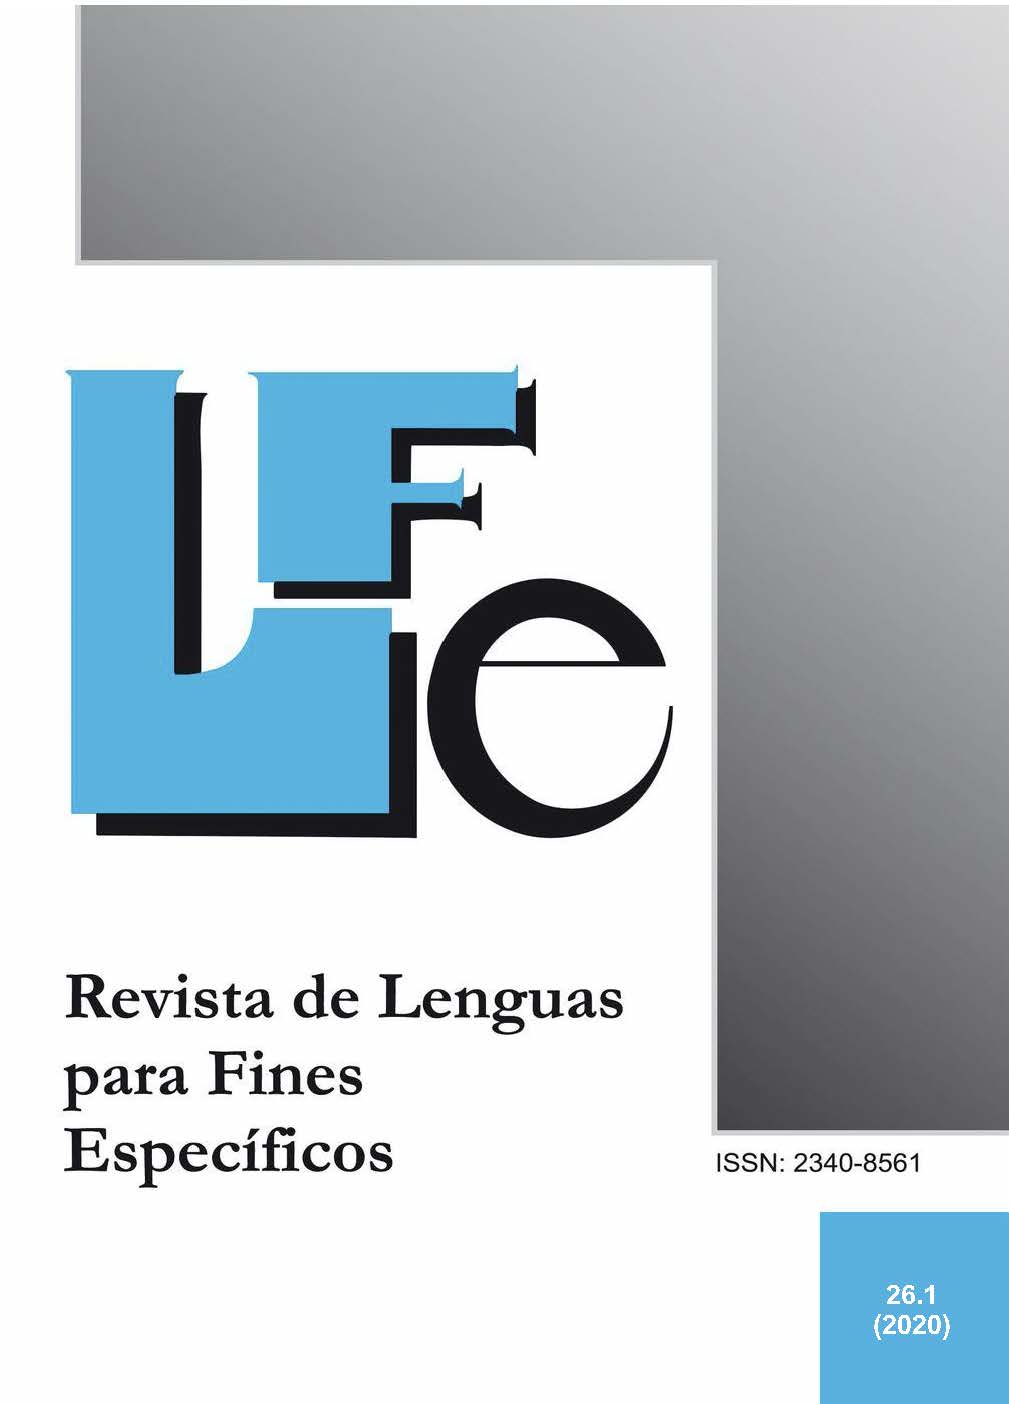 					View Vol. 26 No. 1 (2020): Revista de lenguas para fines específicos
				